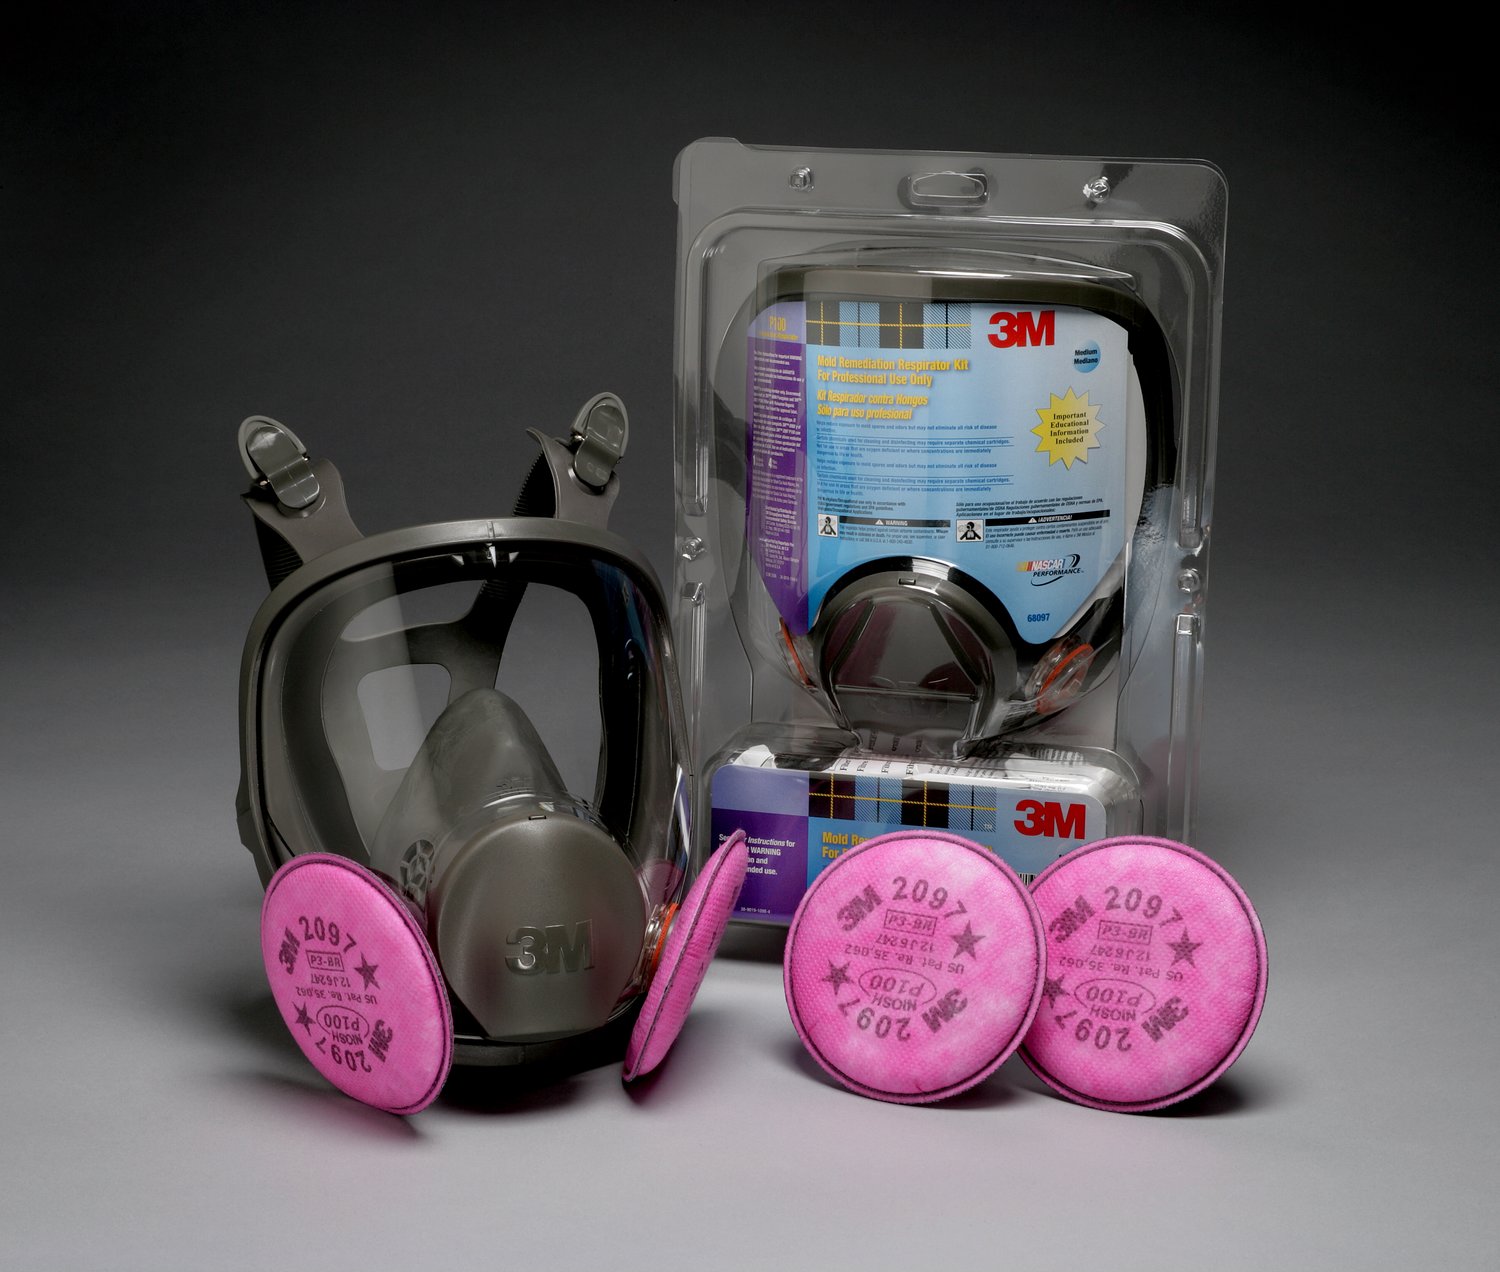 7010316002 - 3M Mold Remediation Respirator Kit 69097, Large 2 Kits EA/Case